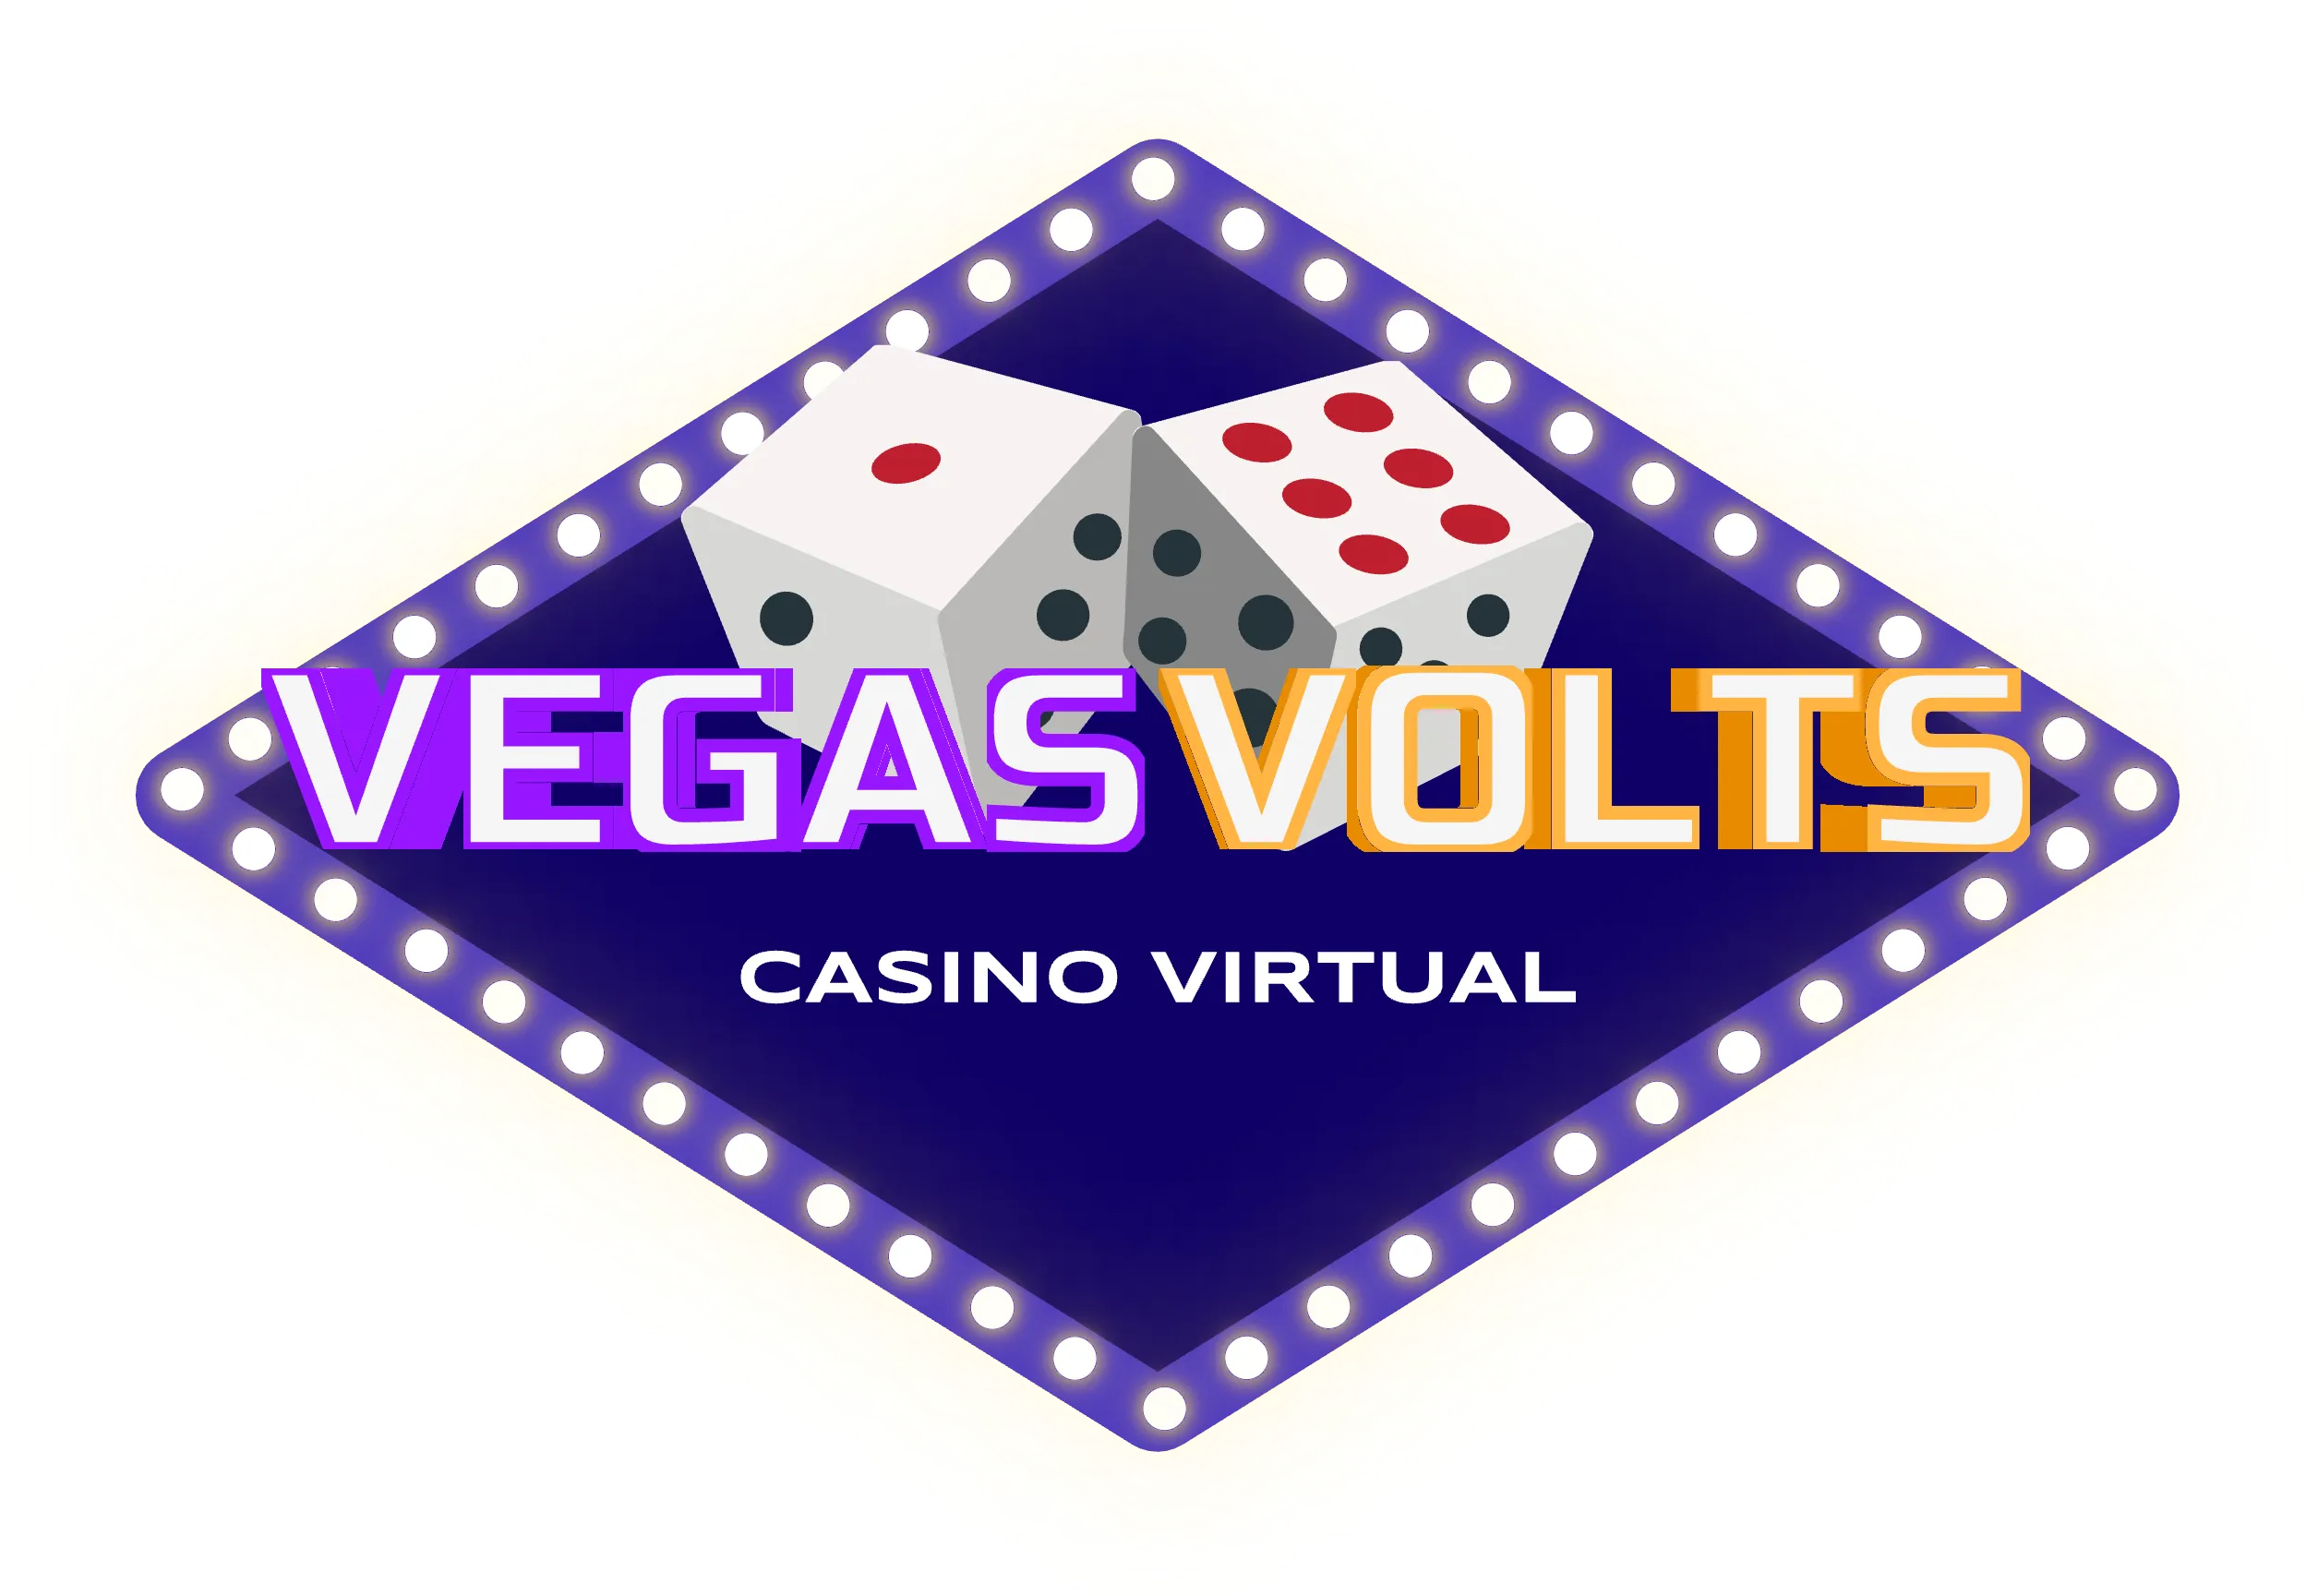 Vegas Volts